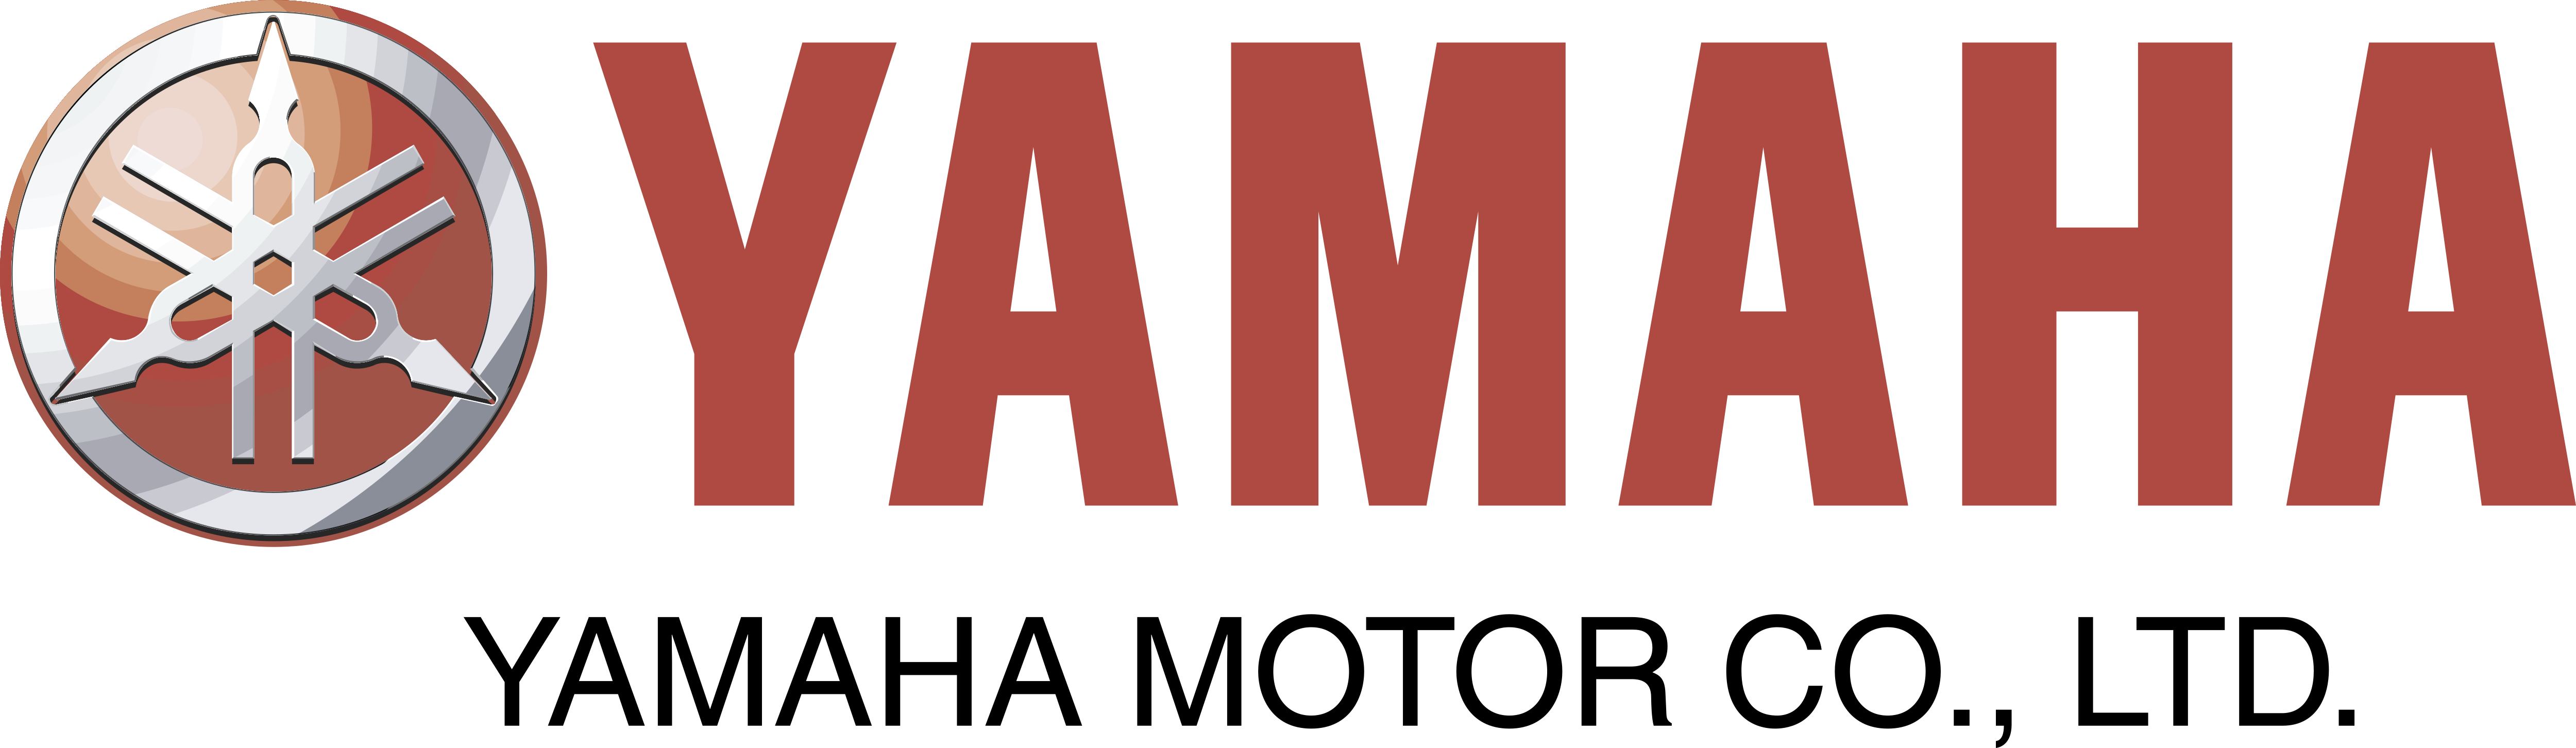 yamaha corporation